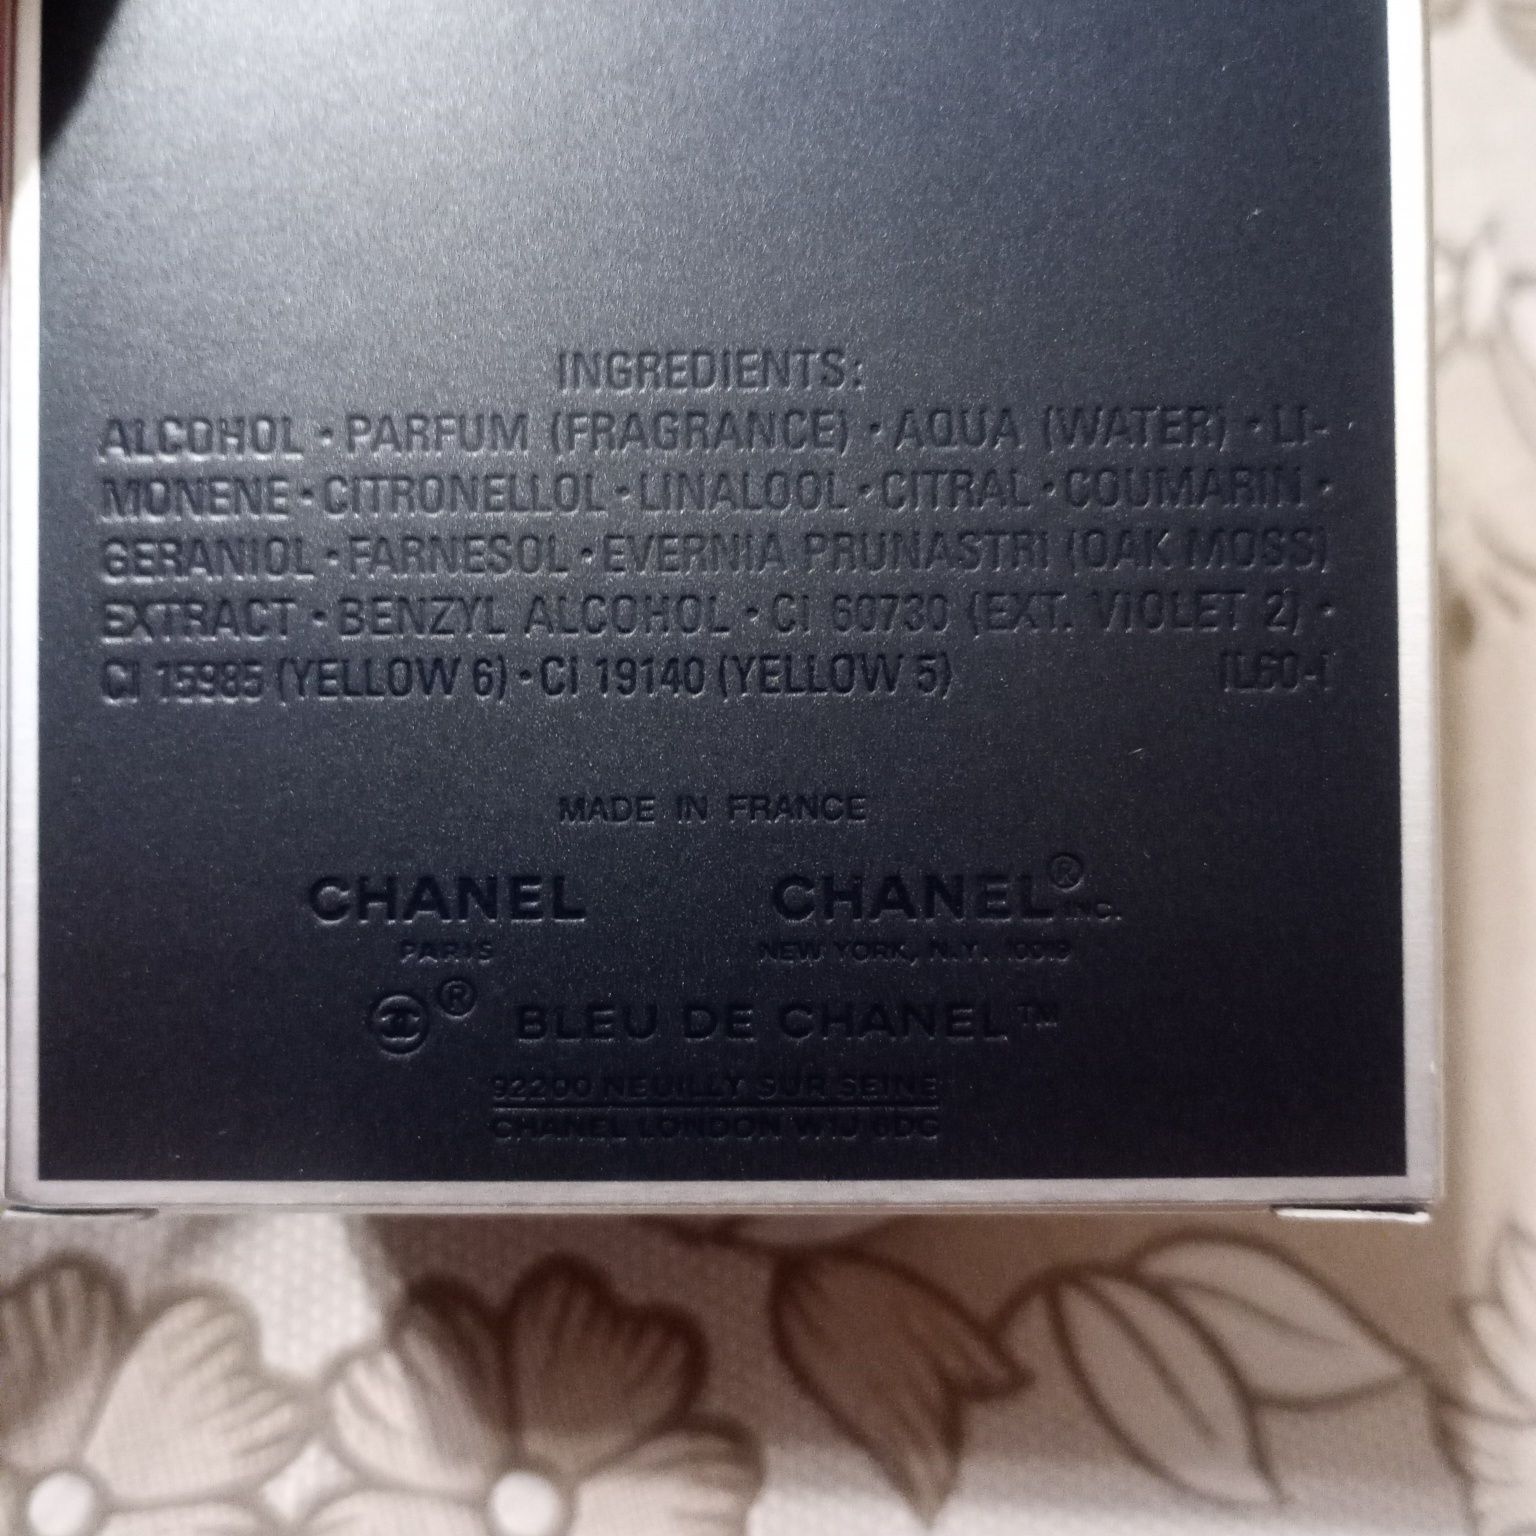 Chanel Bleu de chanel